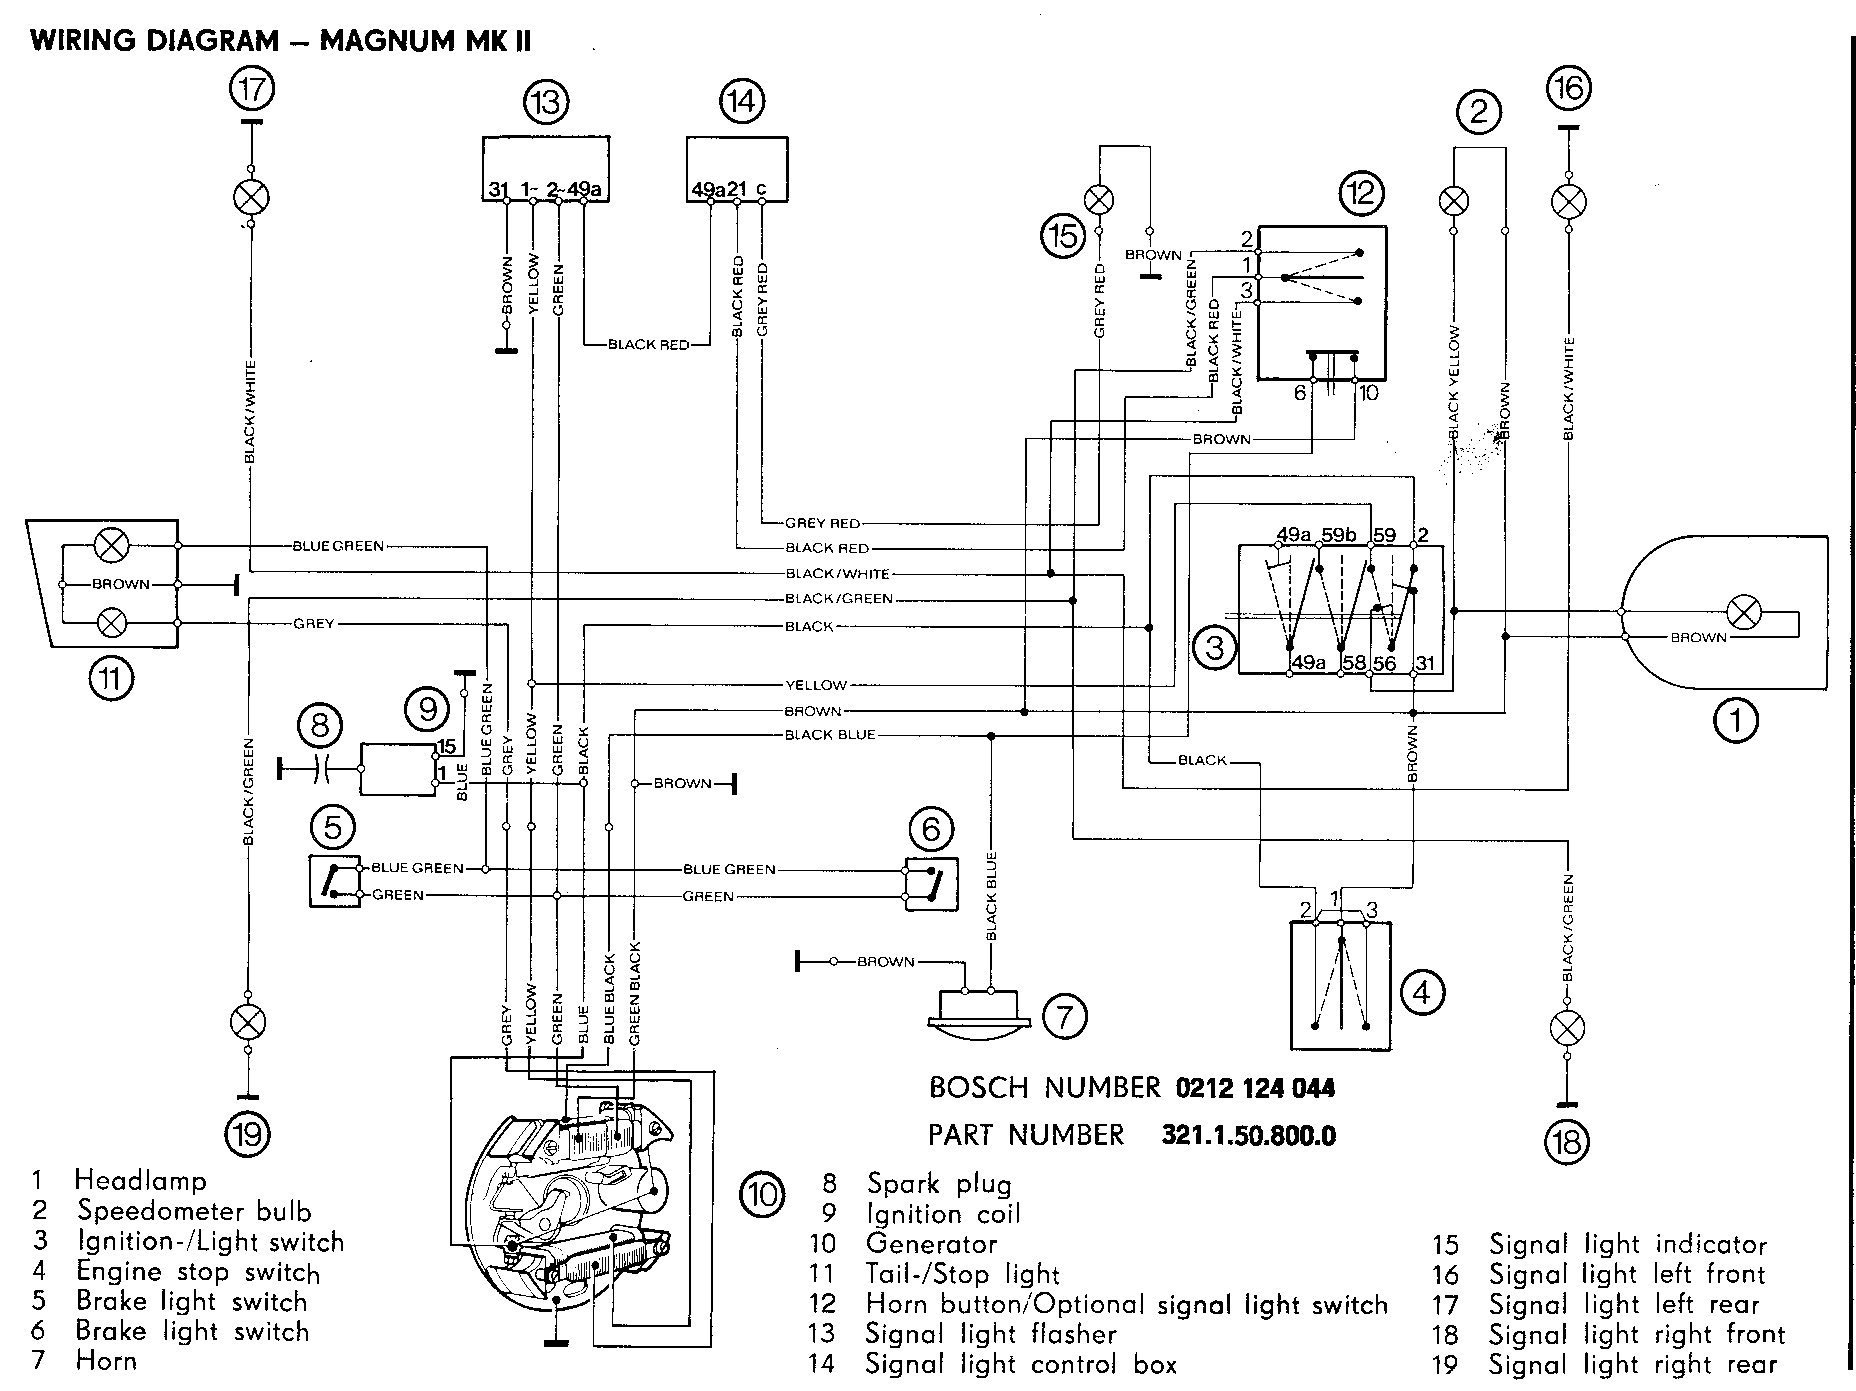 97 Dodge Ram Trailer Wiring Diagram Pictures Wiring Diagram Sample